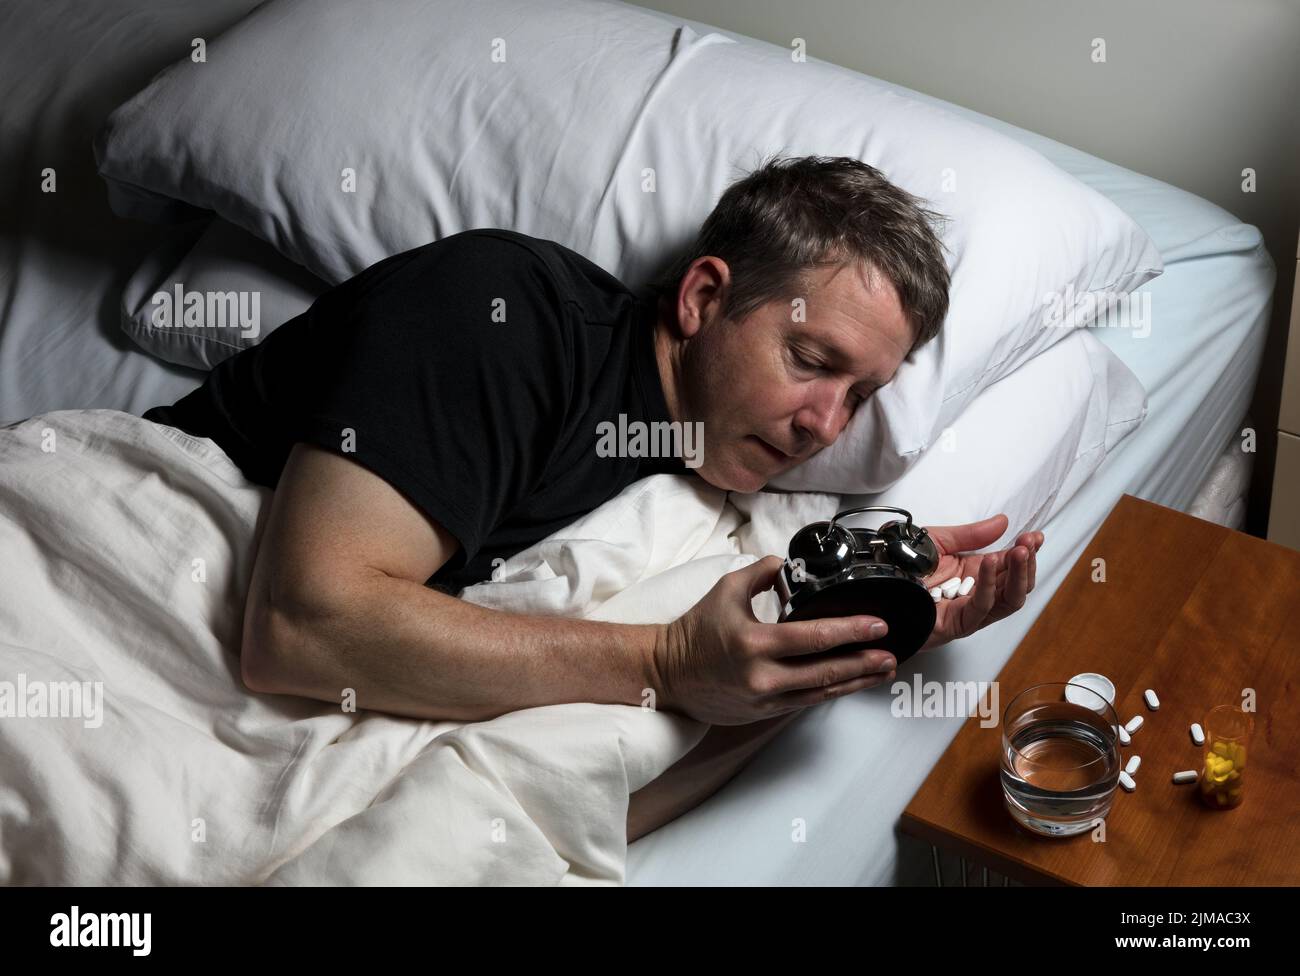 Mature man having difficulty falling asleep at night thus taking medicine Stock Photo